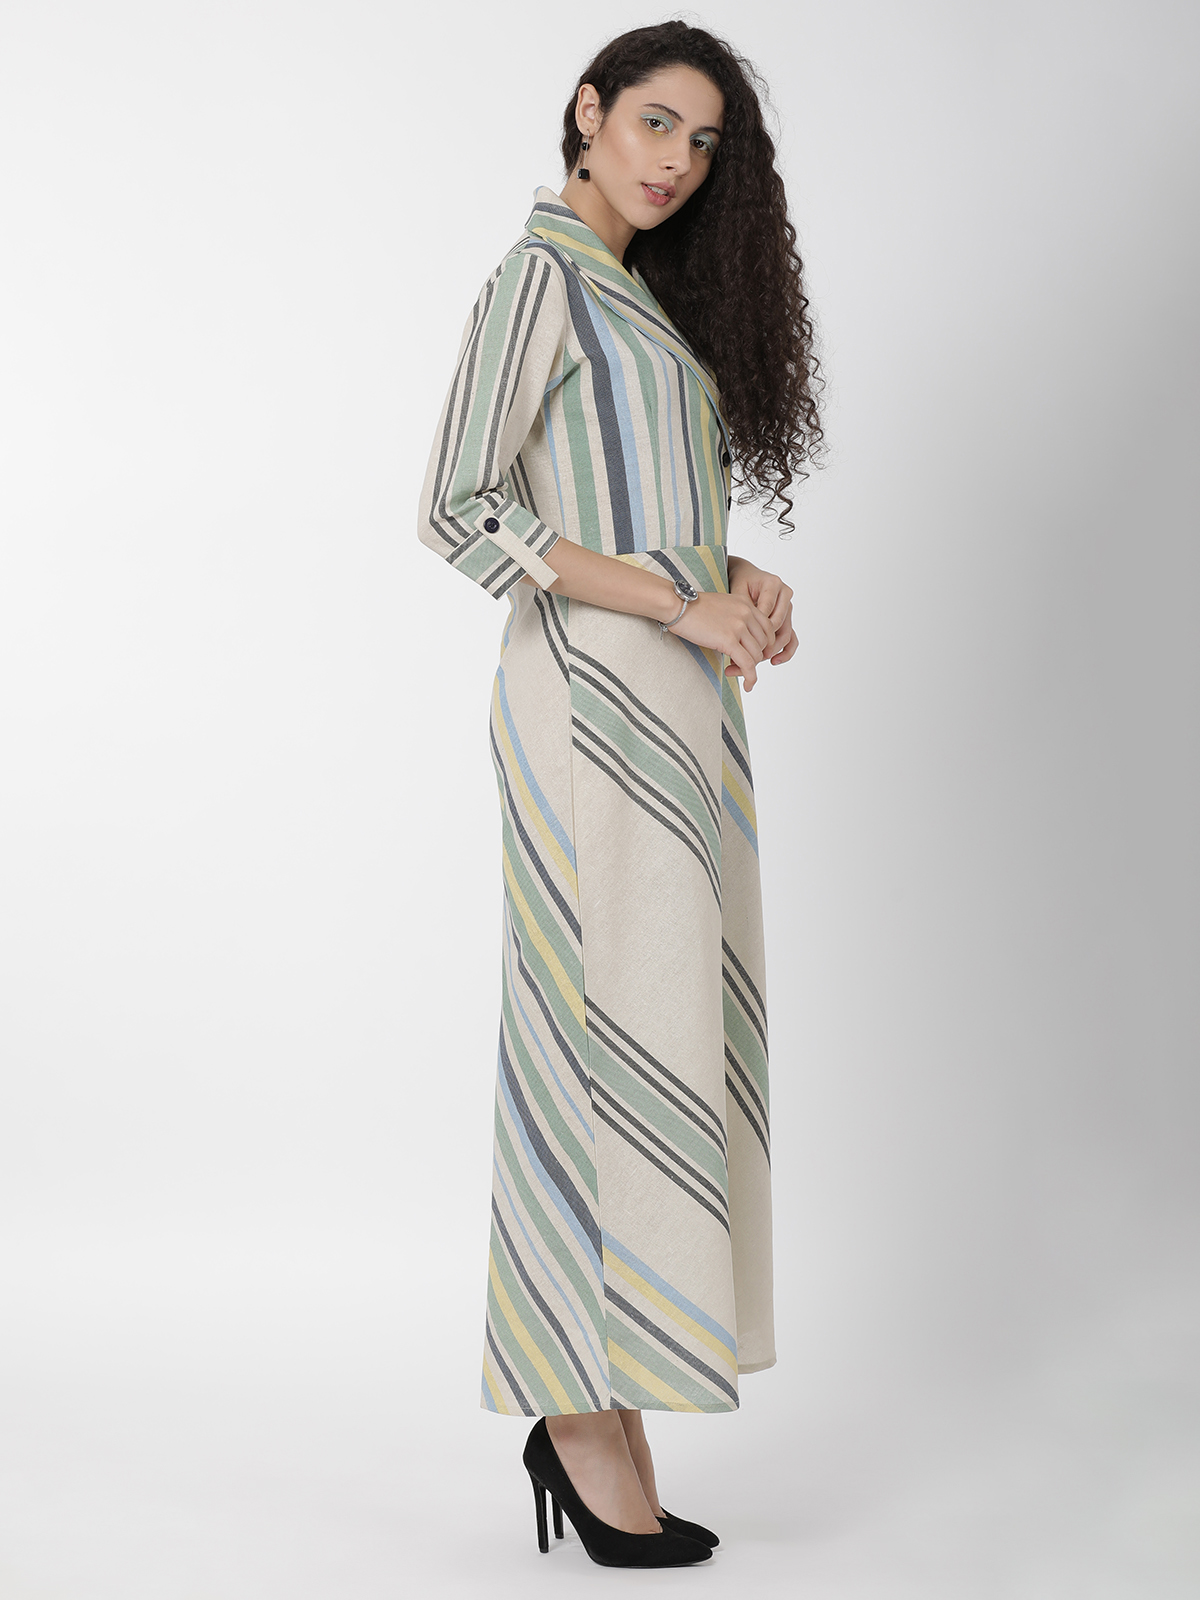 Gorgeous Cotton Linen Beige Striped Printed Floral Floor Length Dress